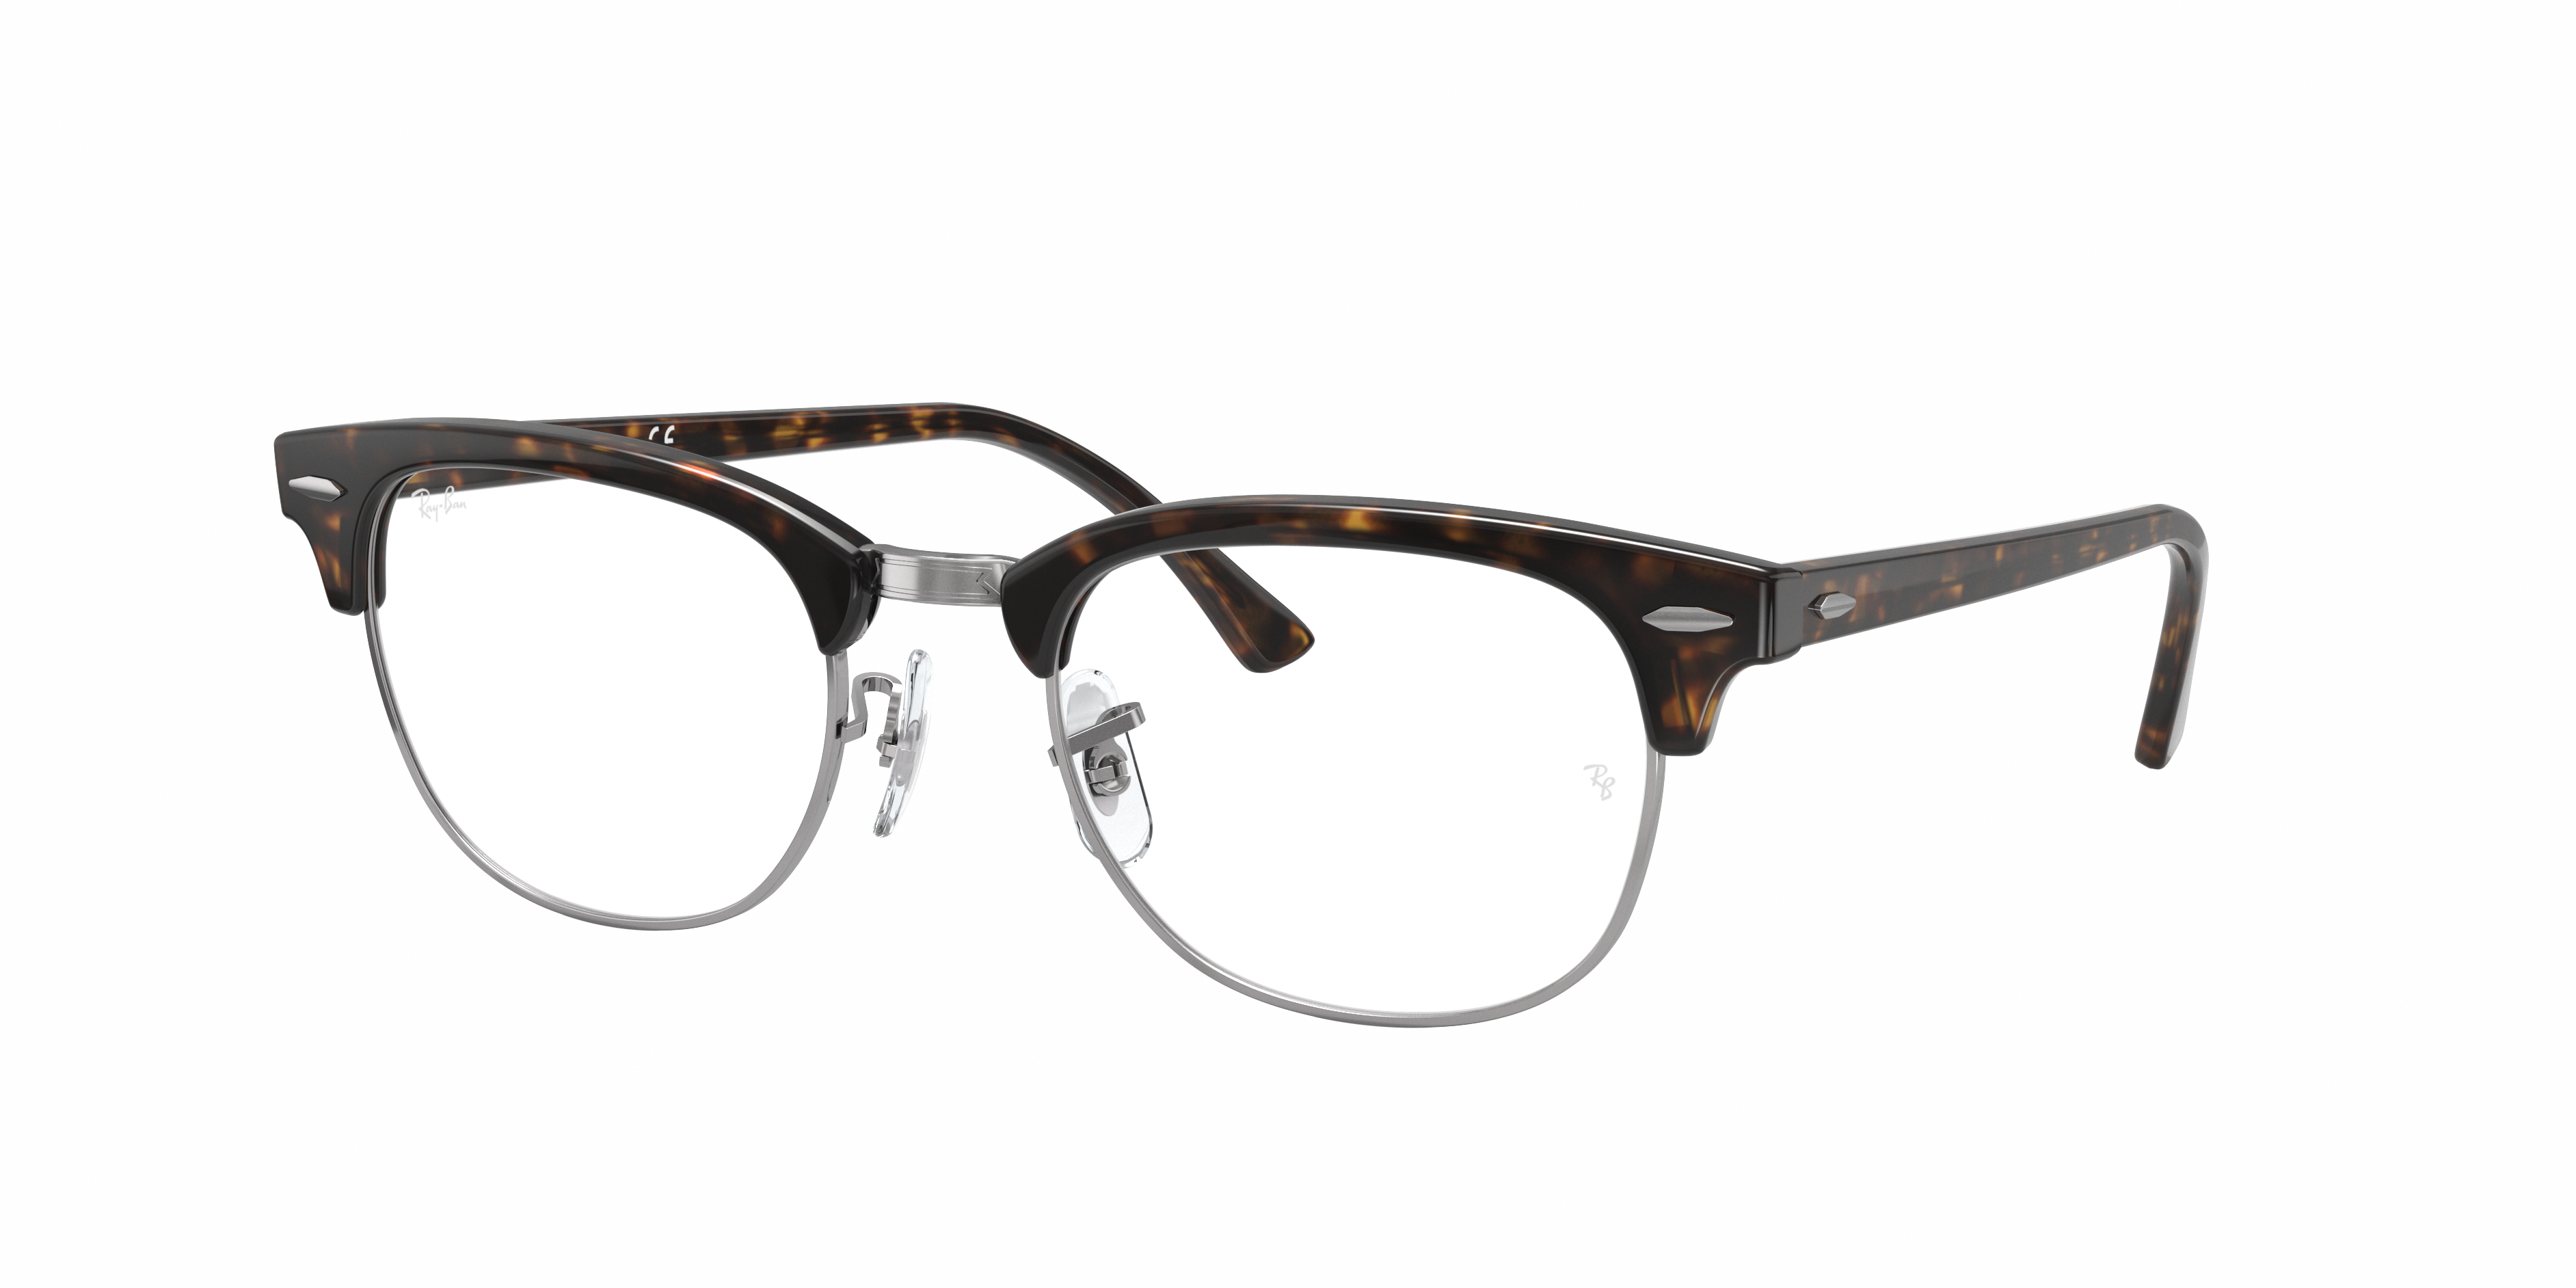 raybans eyeglasses